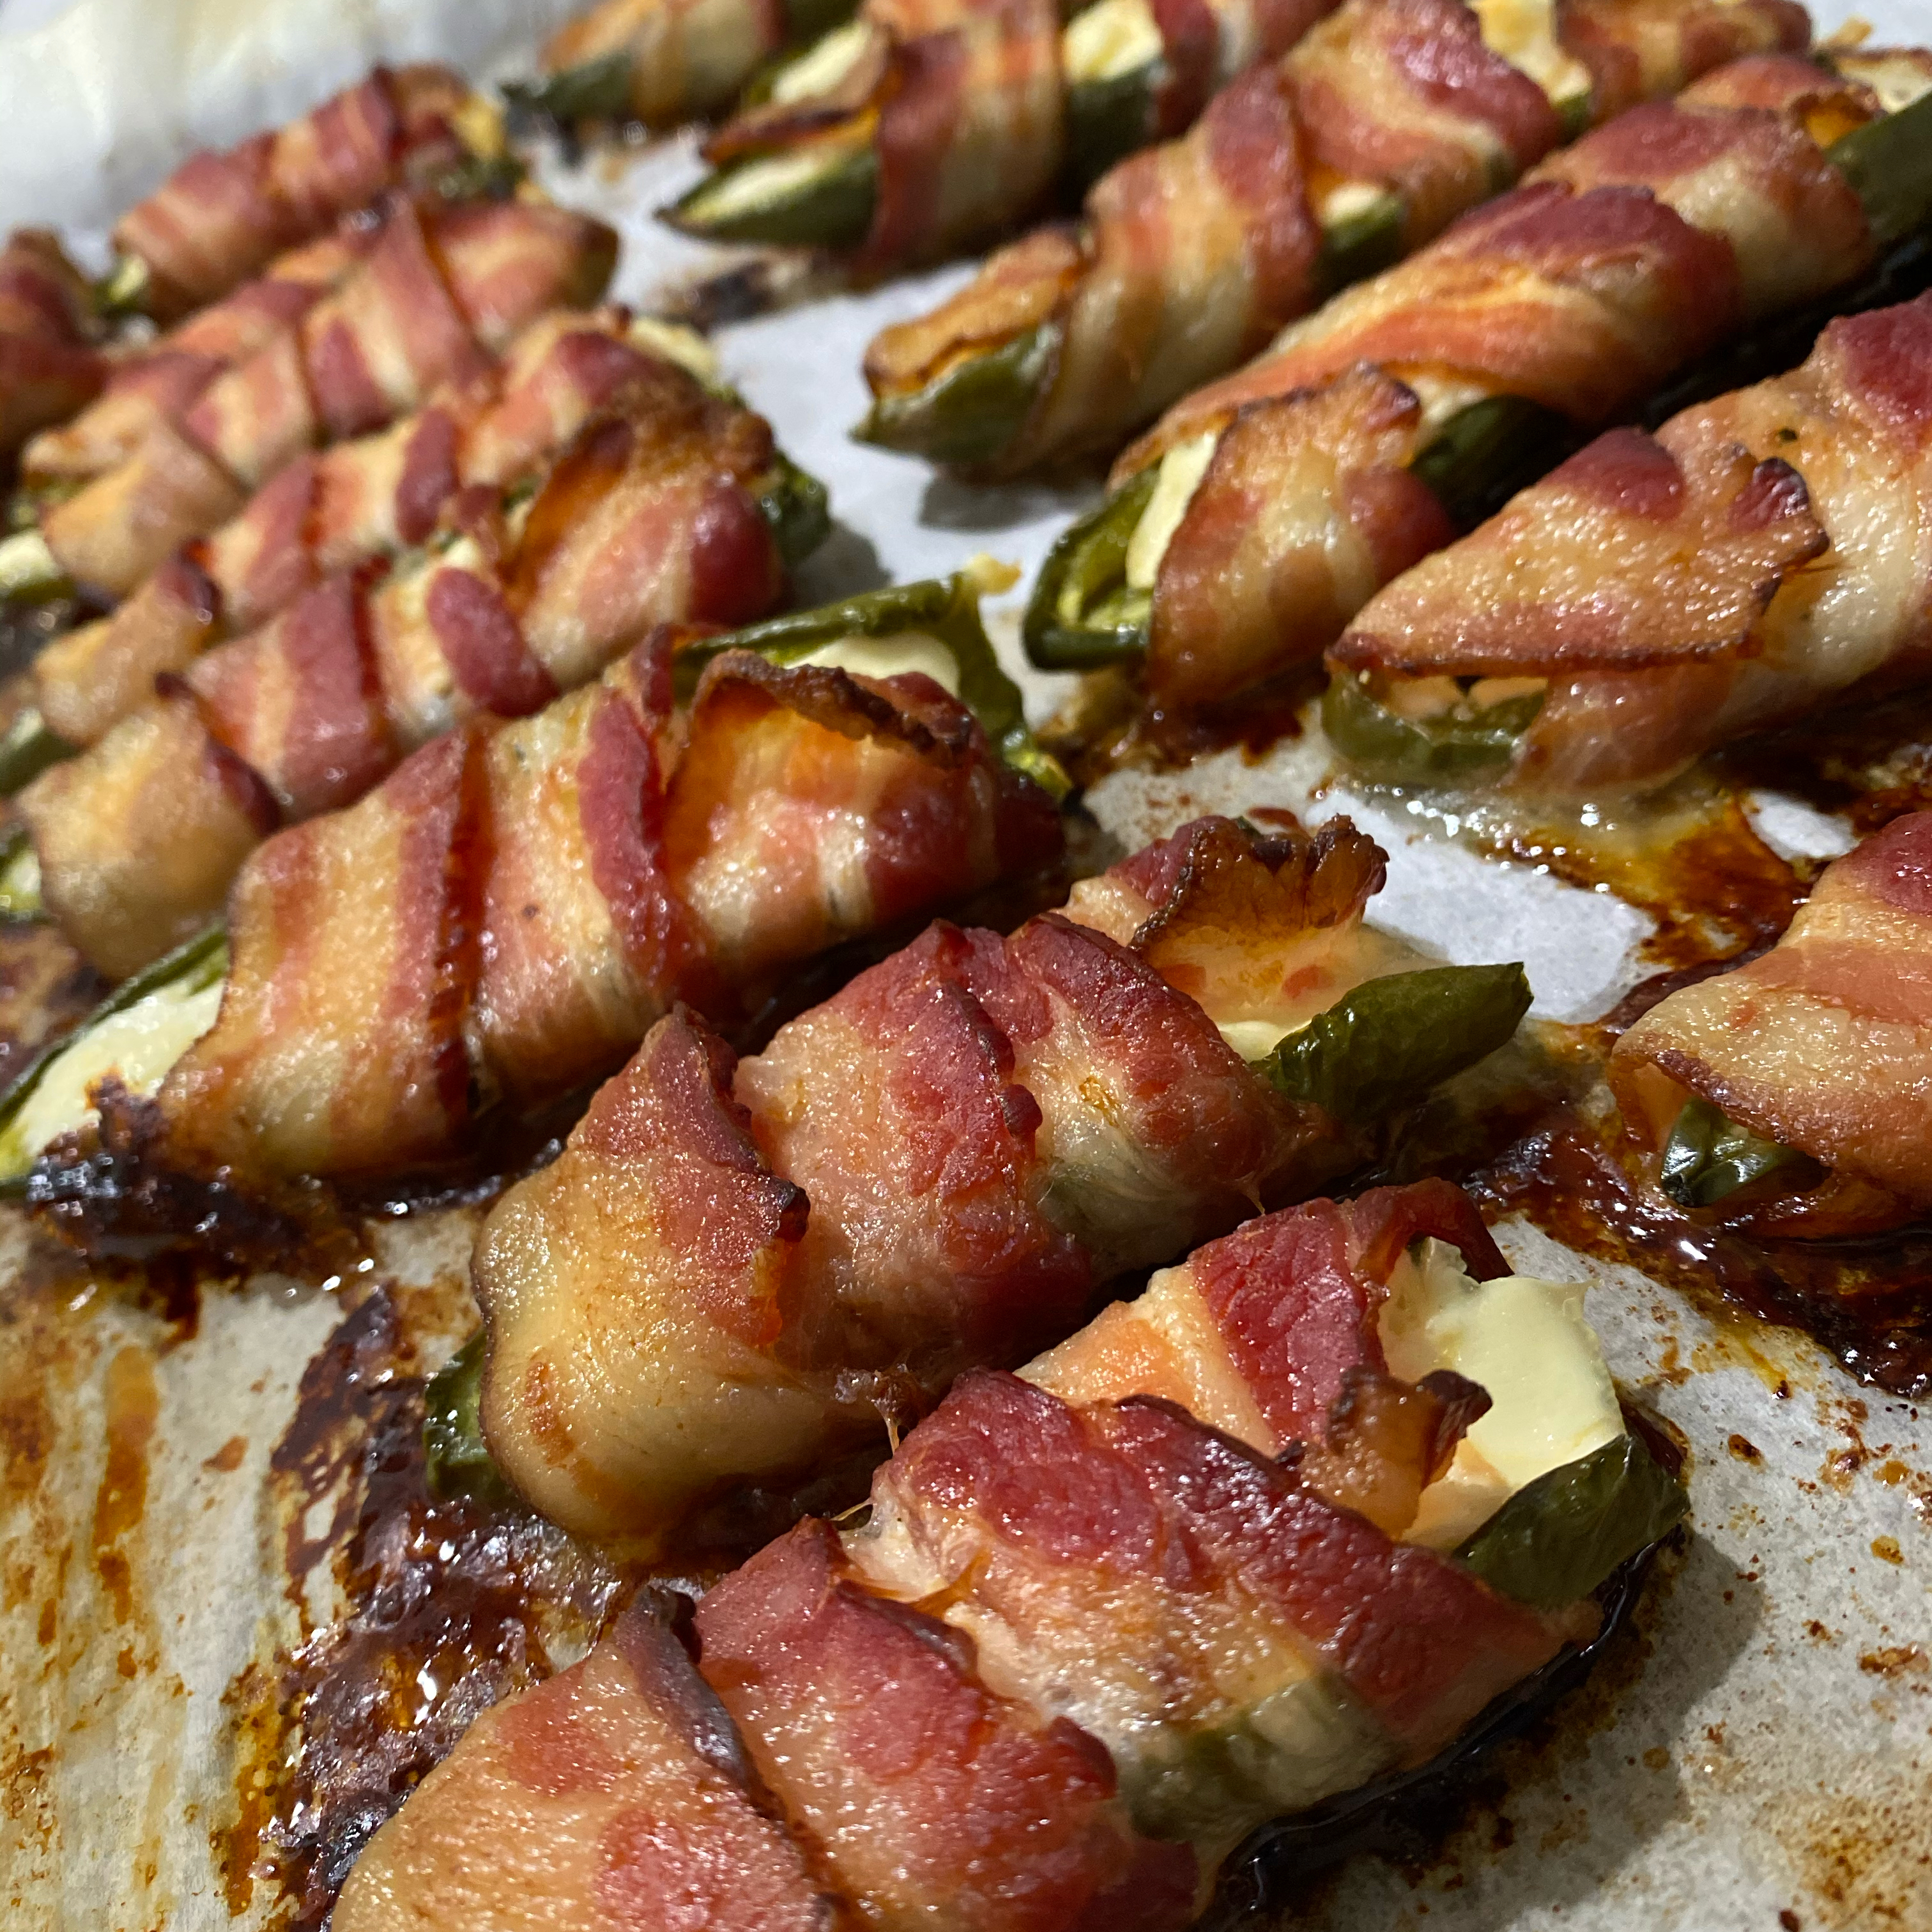 Grilled Bacon Jalapeno Wraps sleyva84